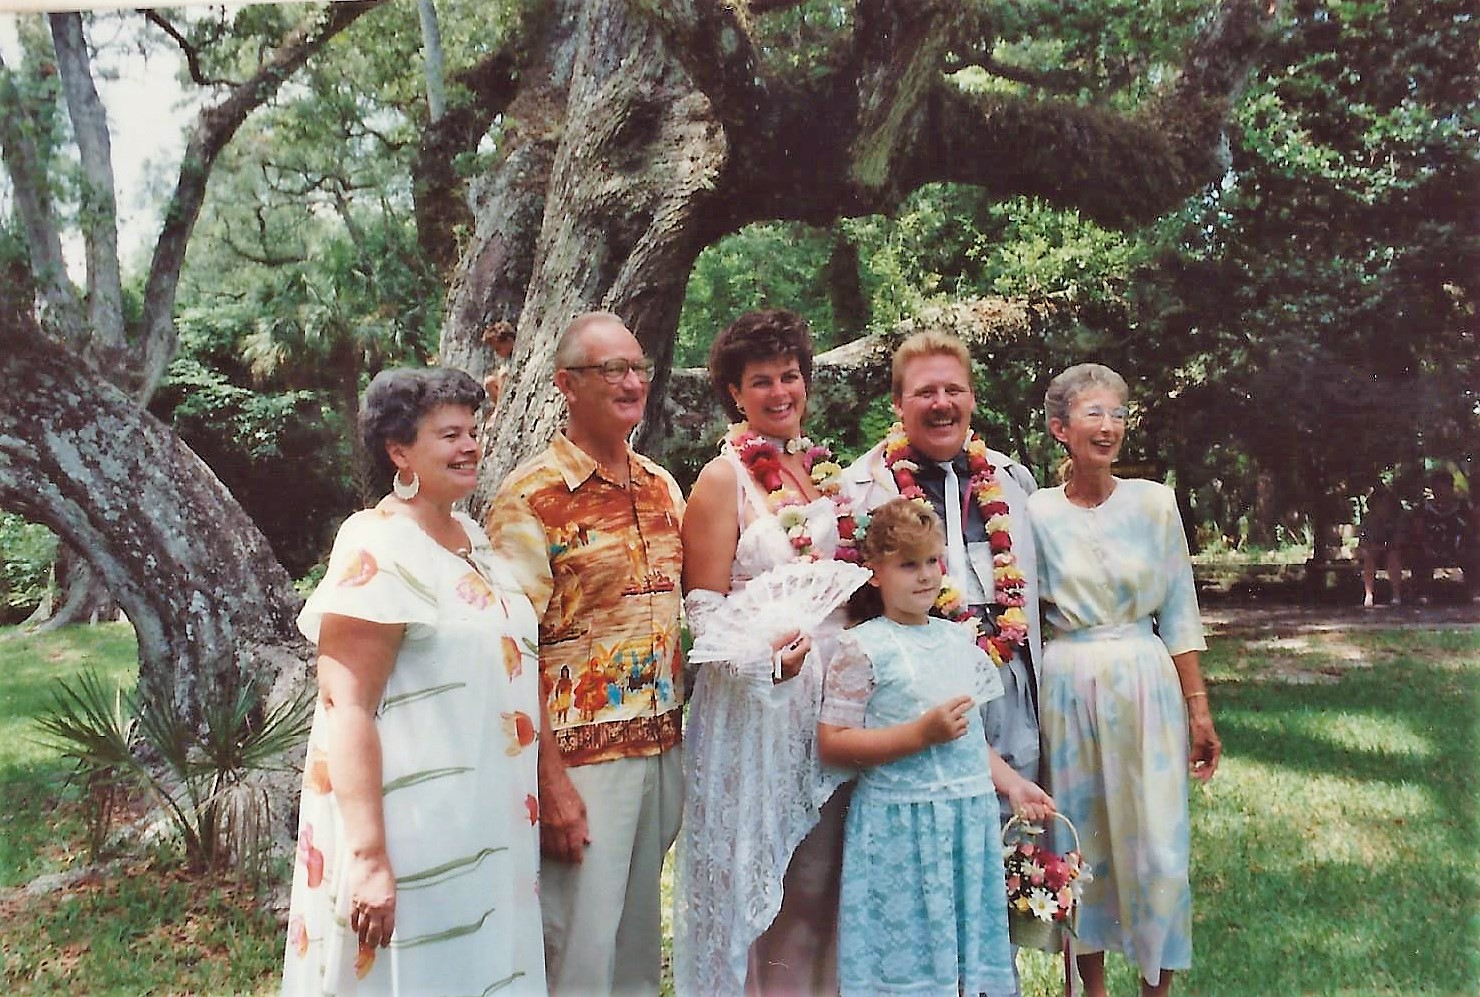 Kevin & Linda' Wedding with Moms, Dad & Ashley